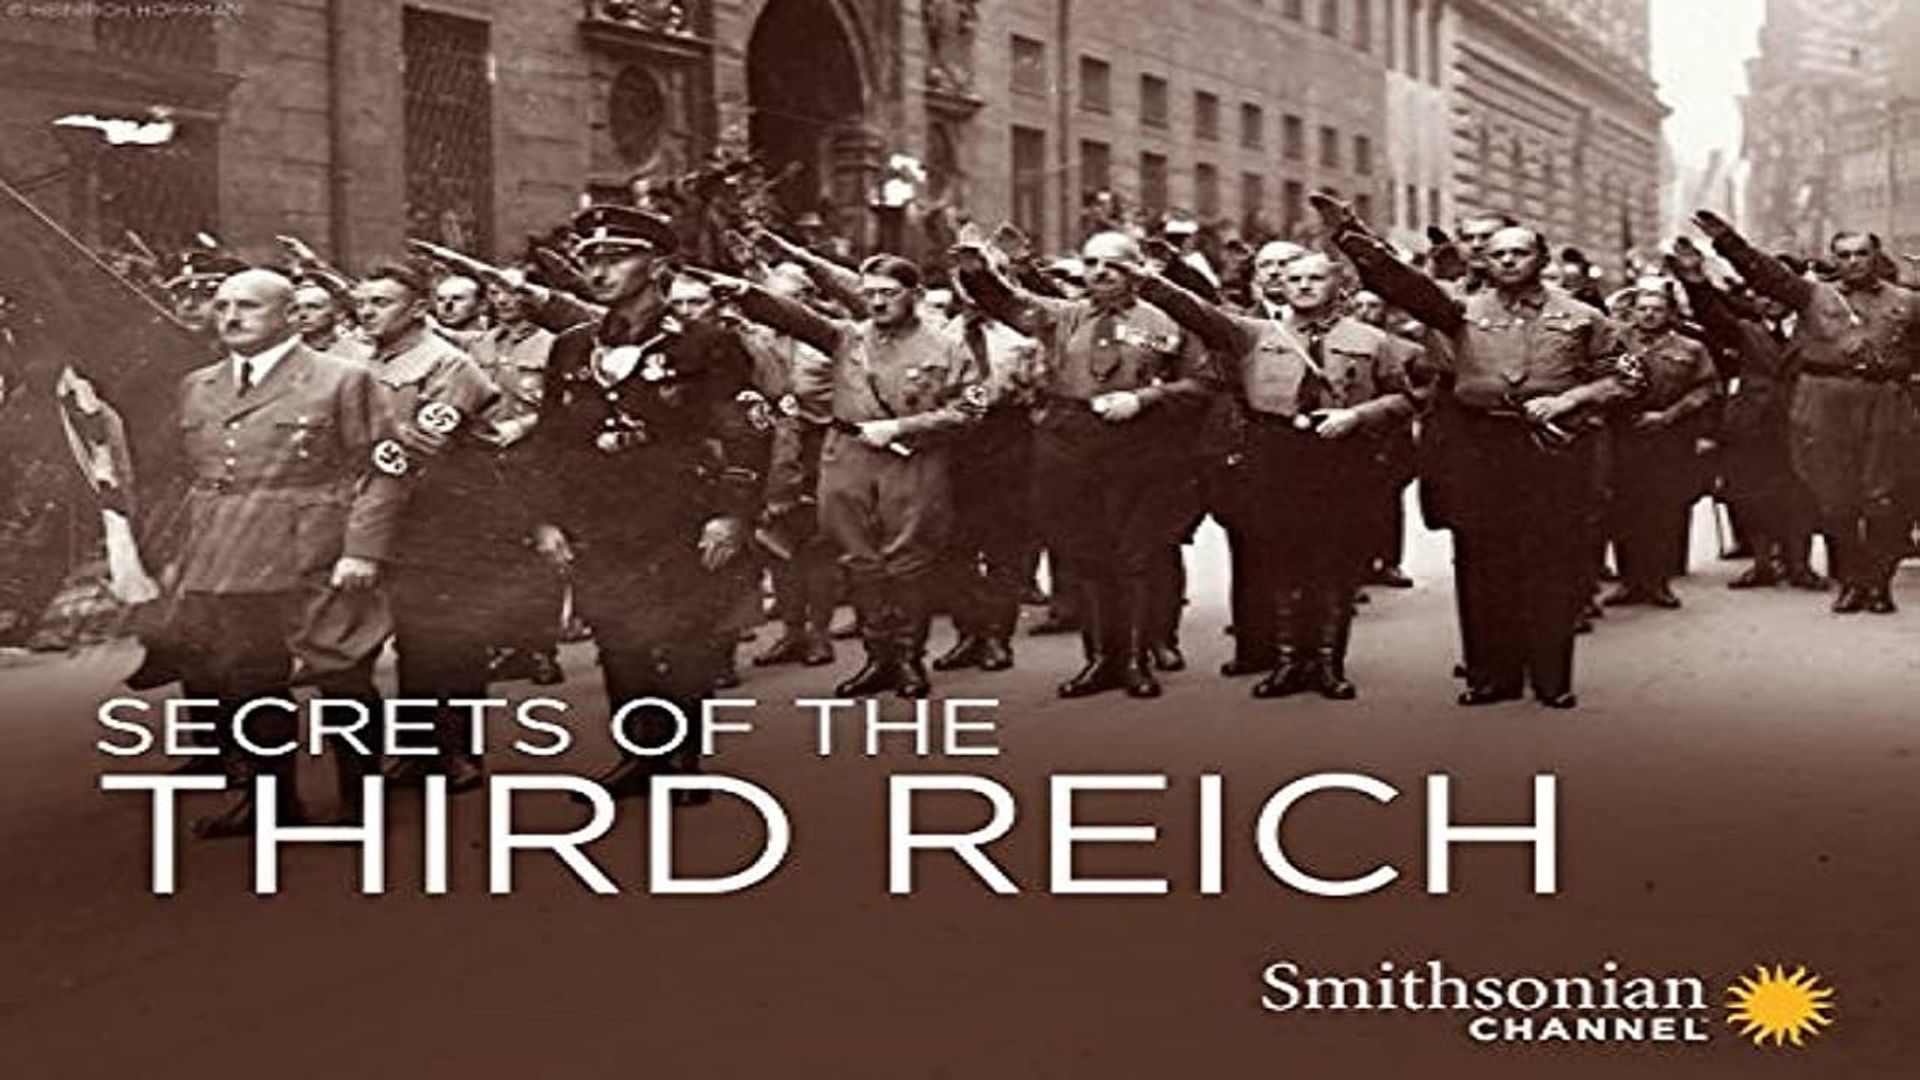 Secrets of the Third Reich background